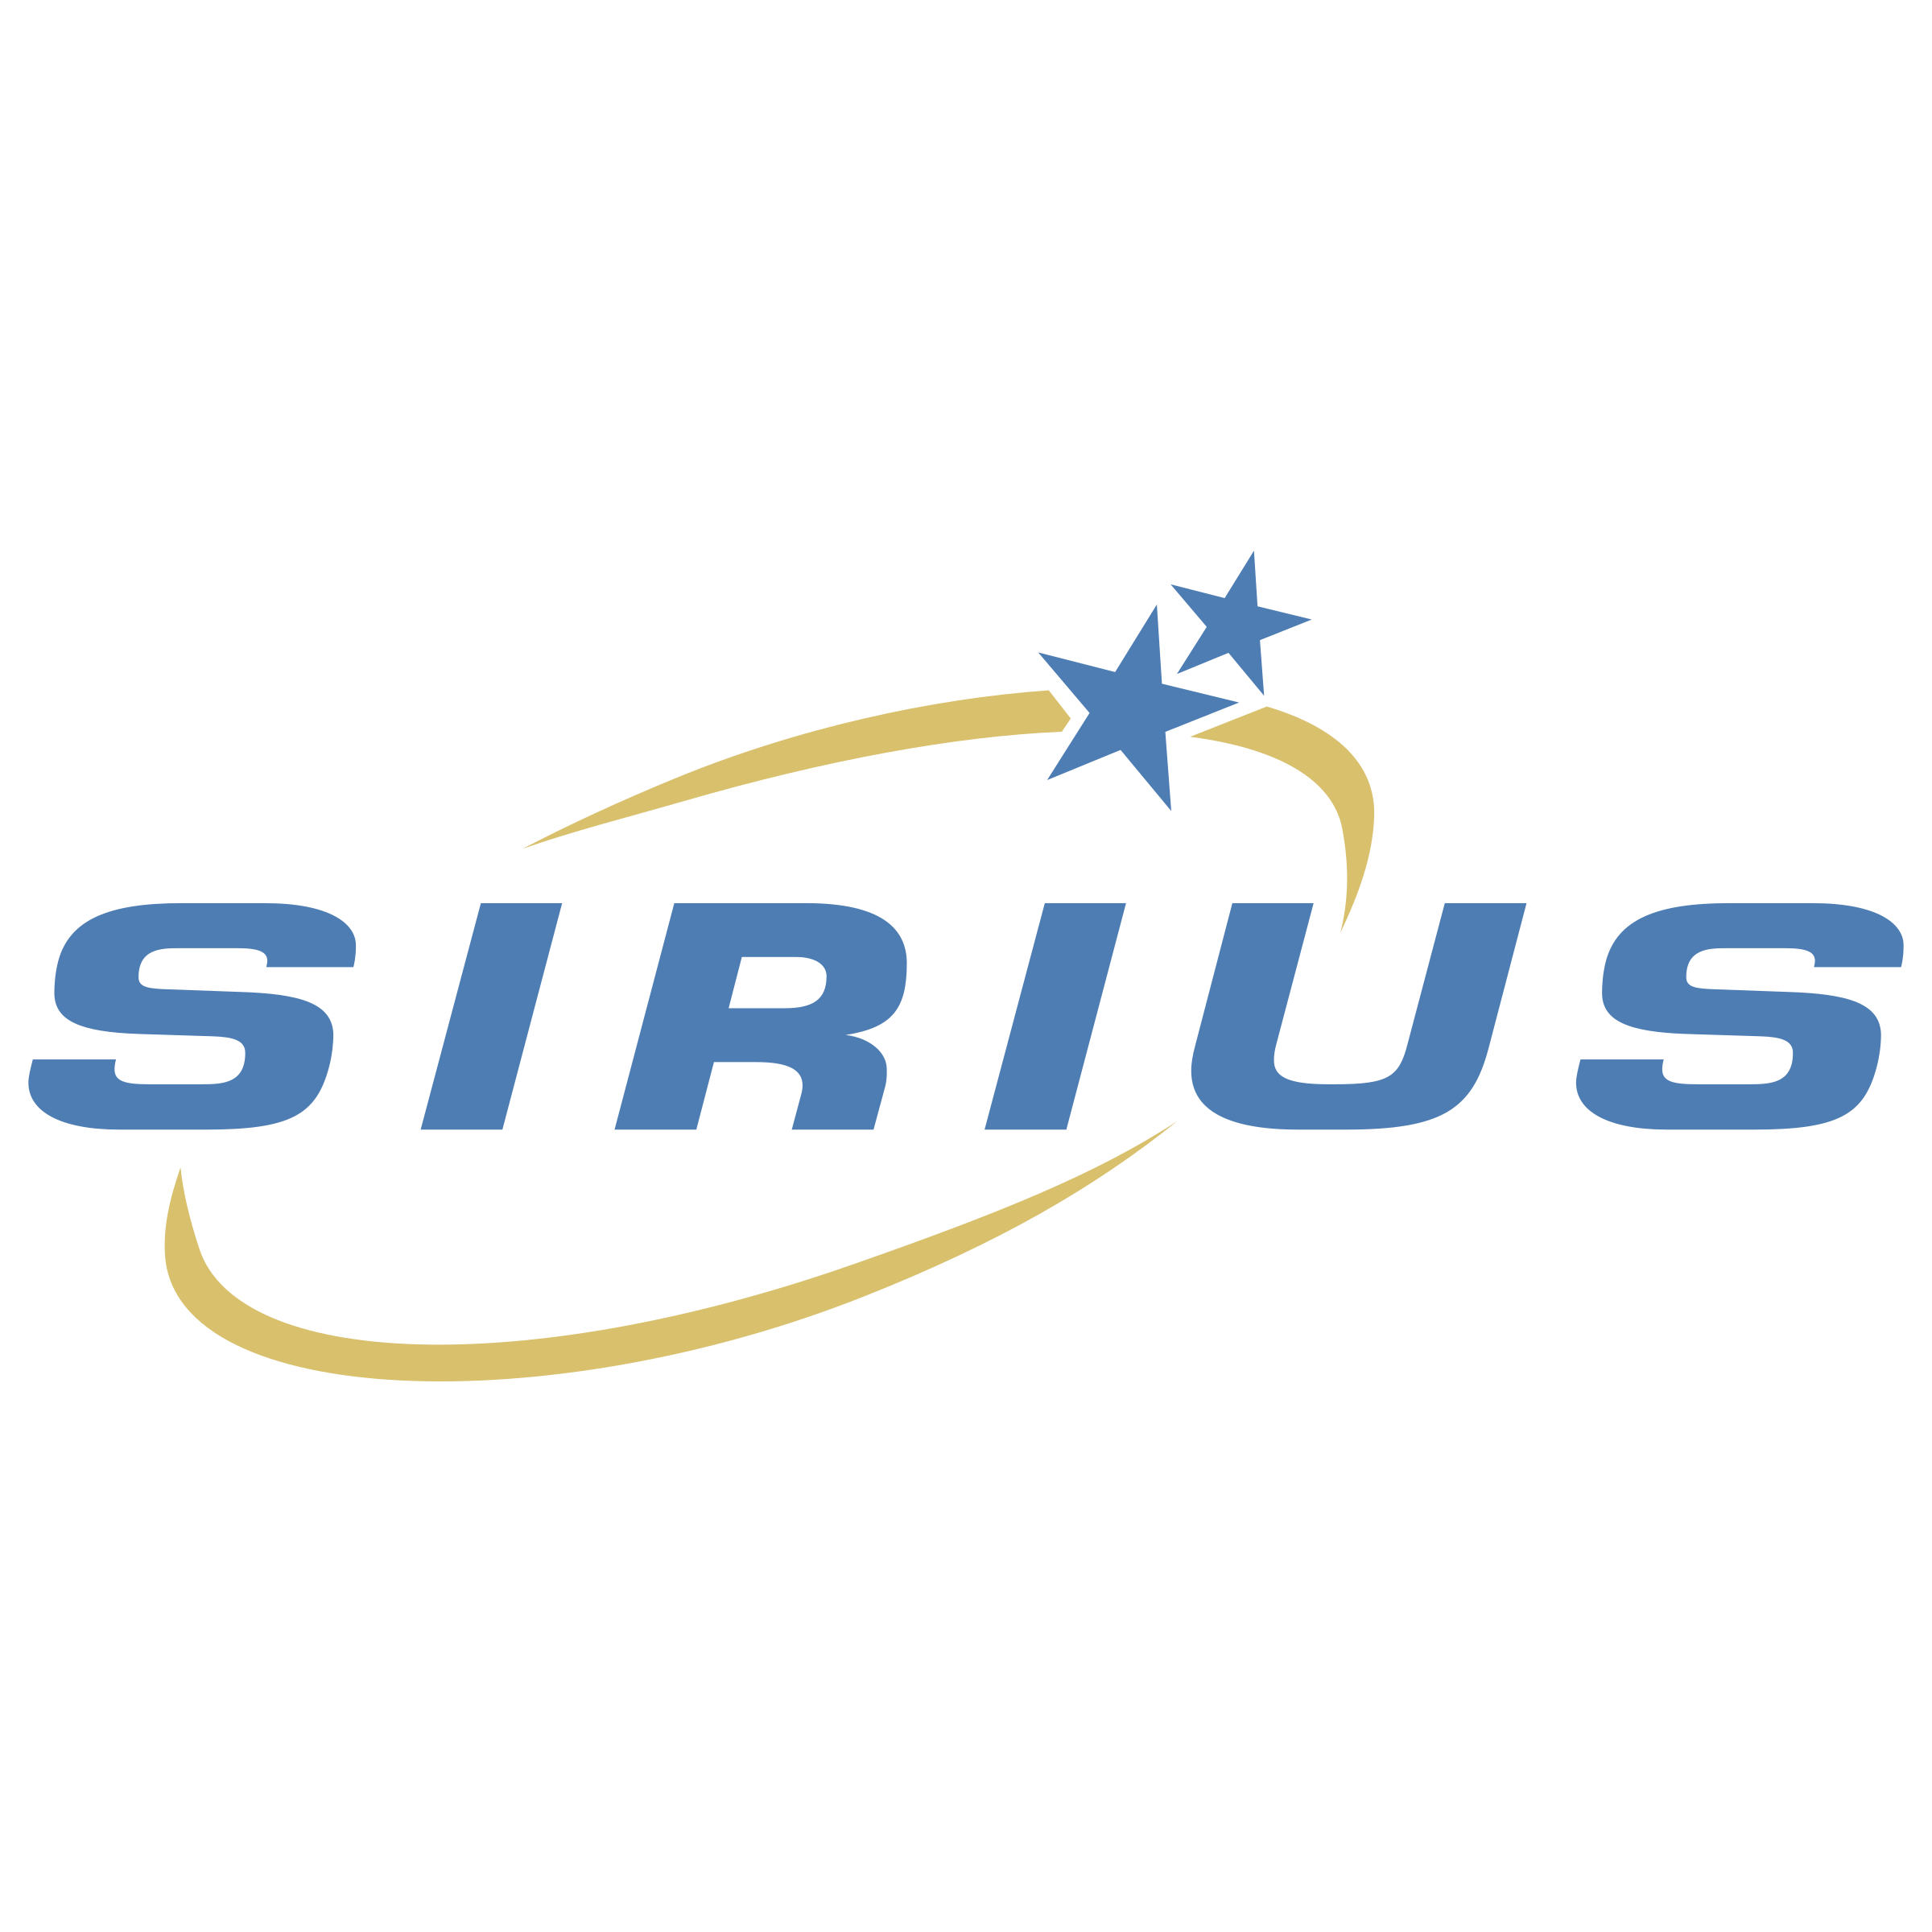 Sirrius Logo - Sirius Logo PNG Transparent & SVG Vector